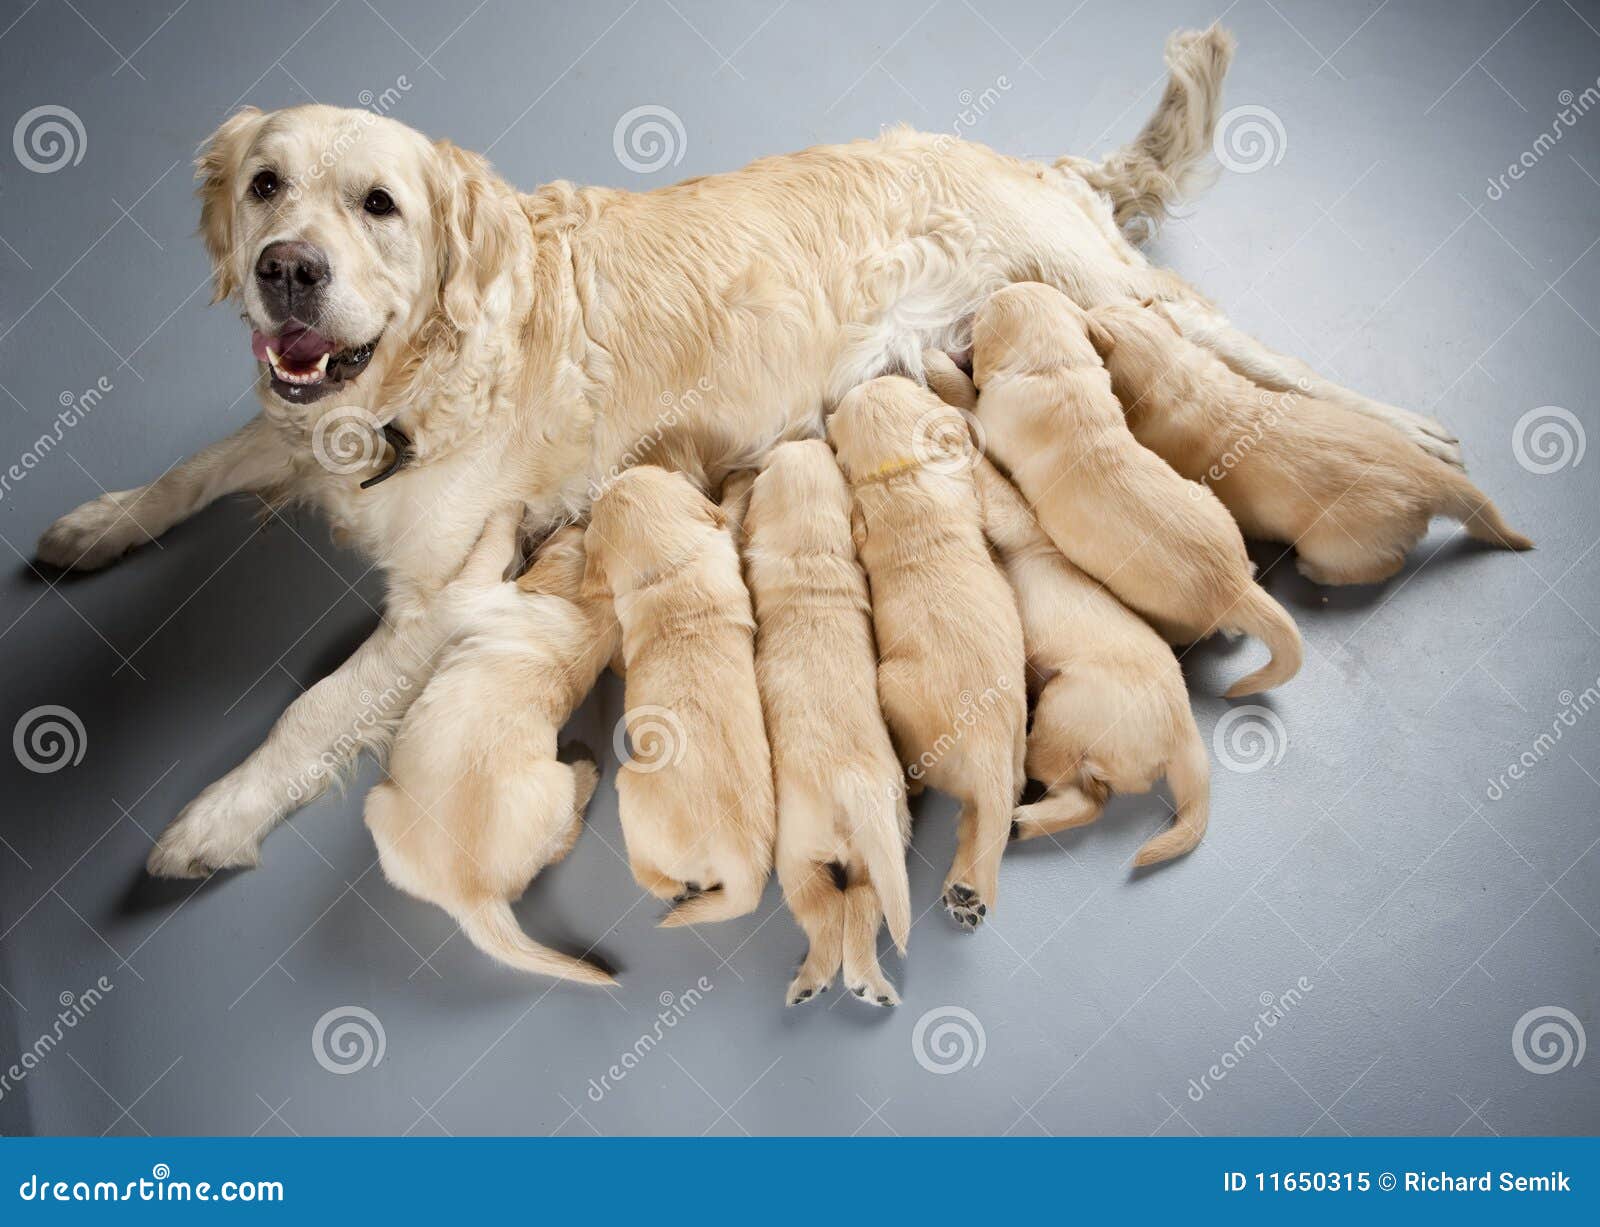 golden retriever with puppies